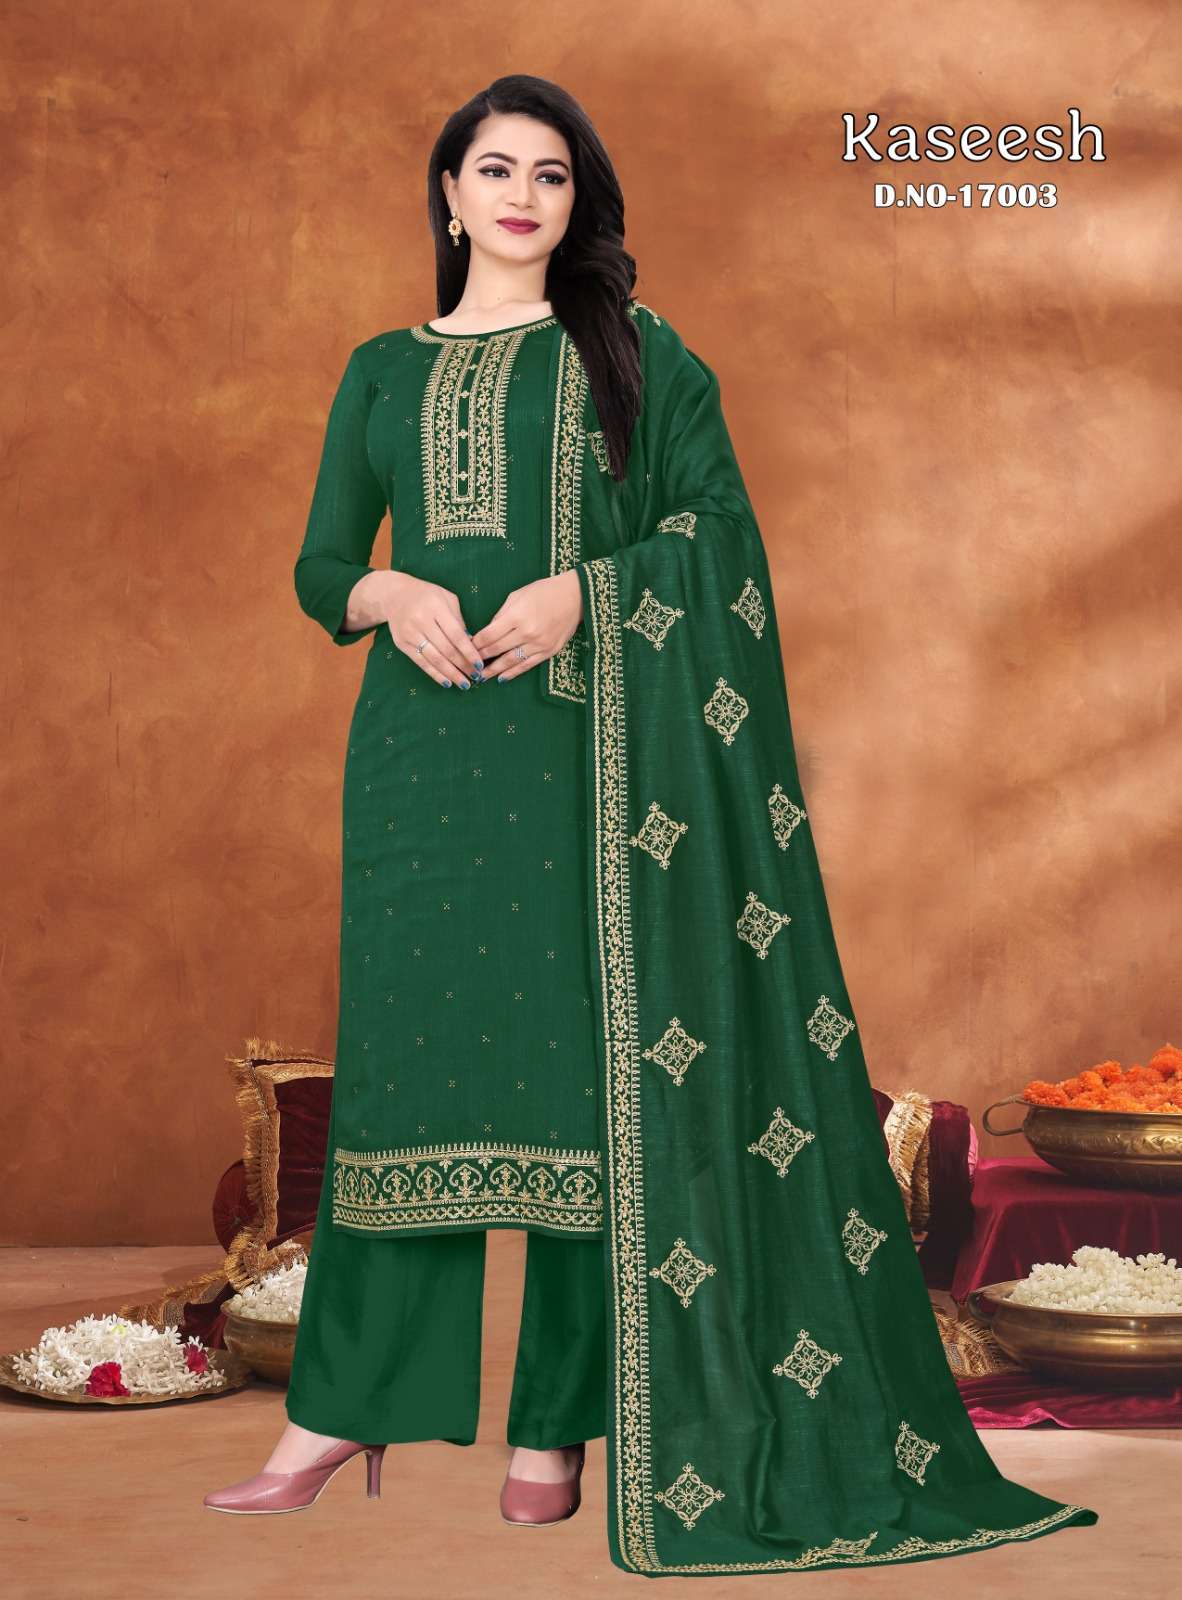 panch ratna kaseesh 17001-17004 series stylish designer salwar kameez catalogue manufacturer surat 